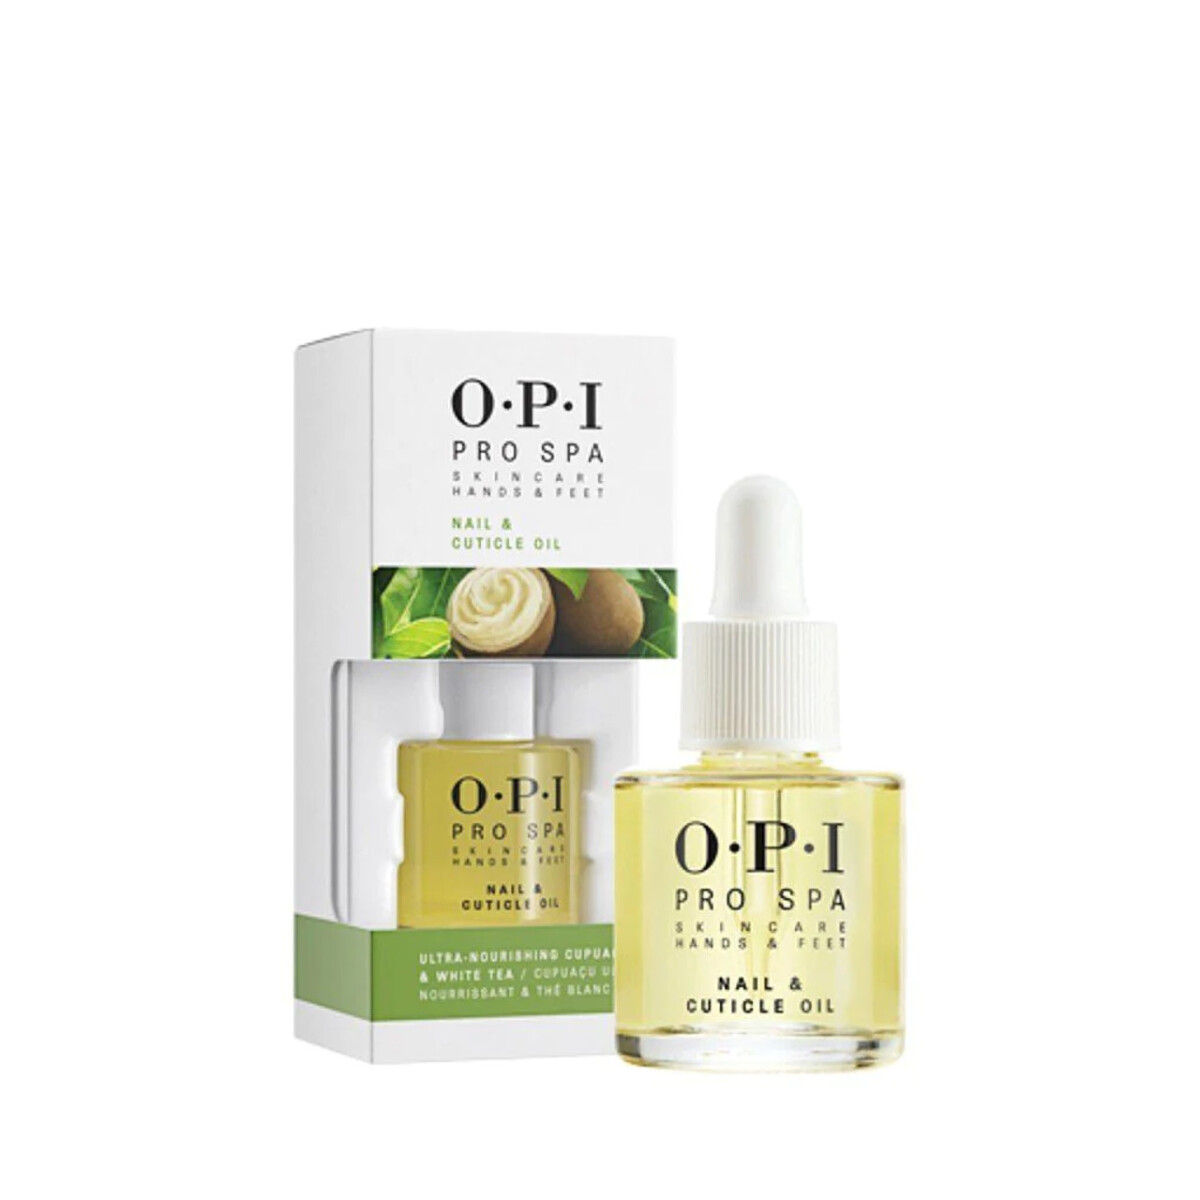 OPI Pro Spa Nail & Cuticle Oil 8.6ml 